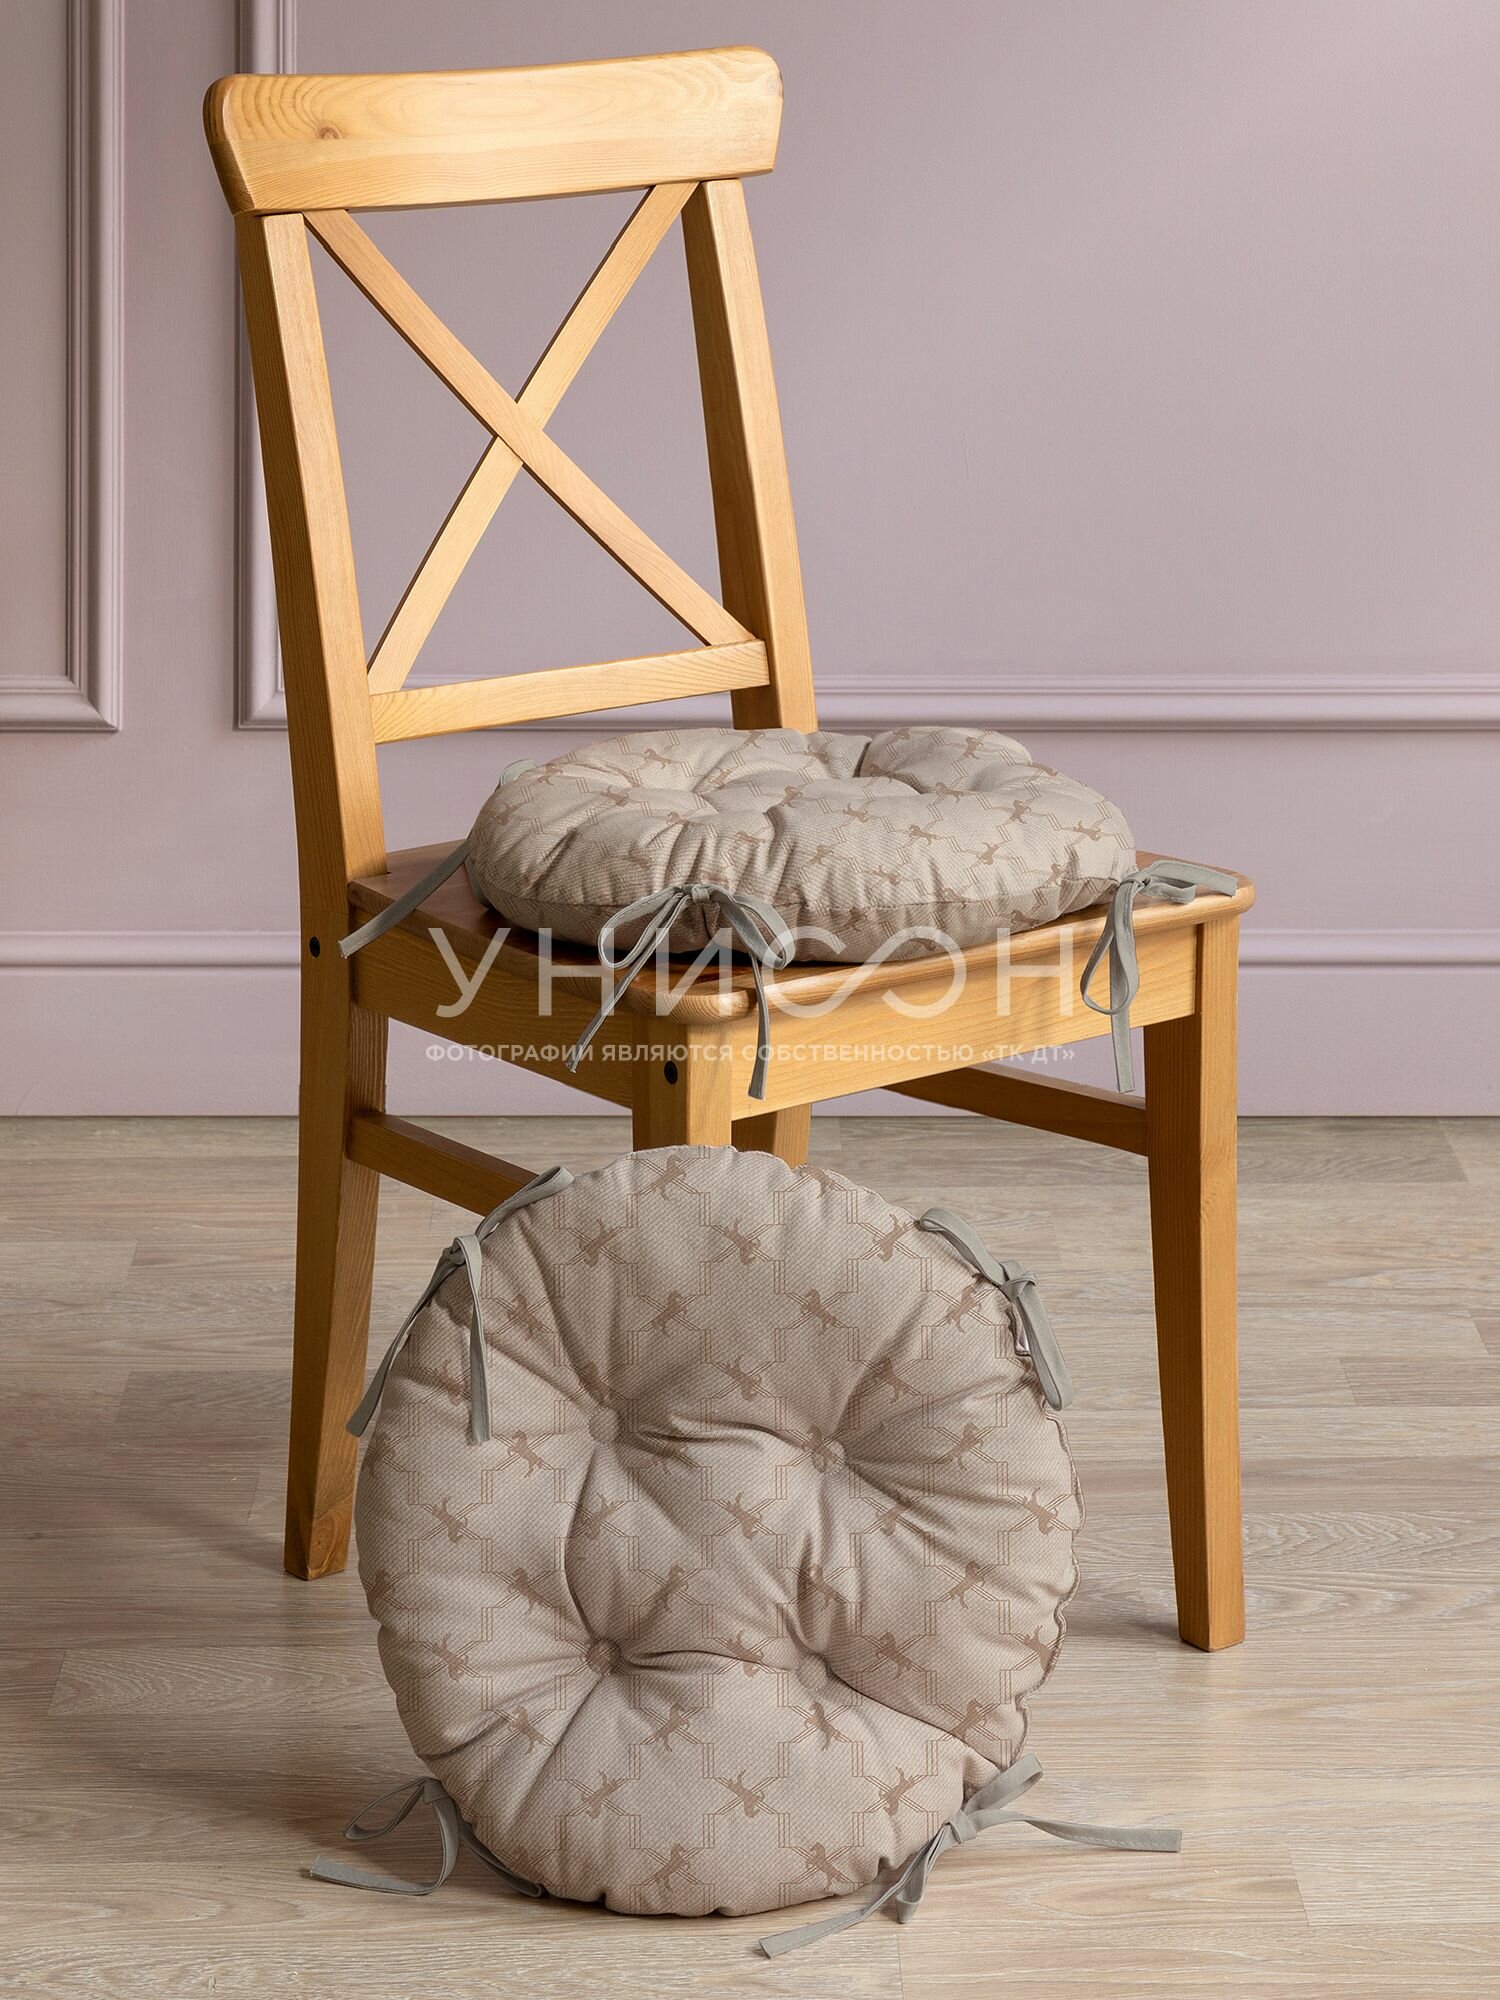 Комплект подушек на стул с тафтингом круглых d40 (2 шт) "Унисон" рис 33035-1 British Club